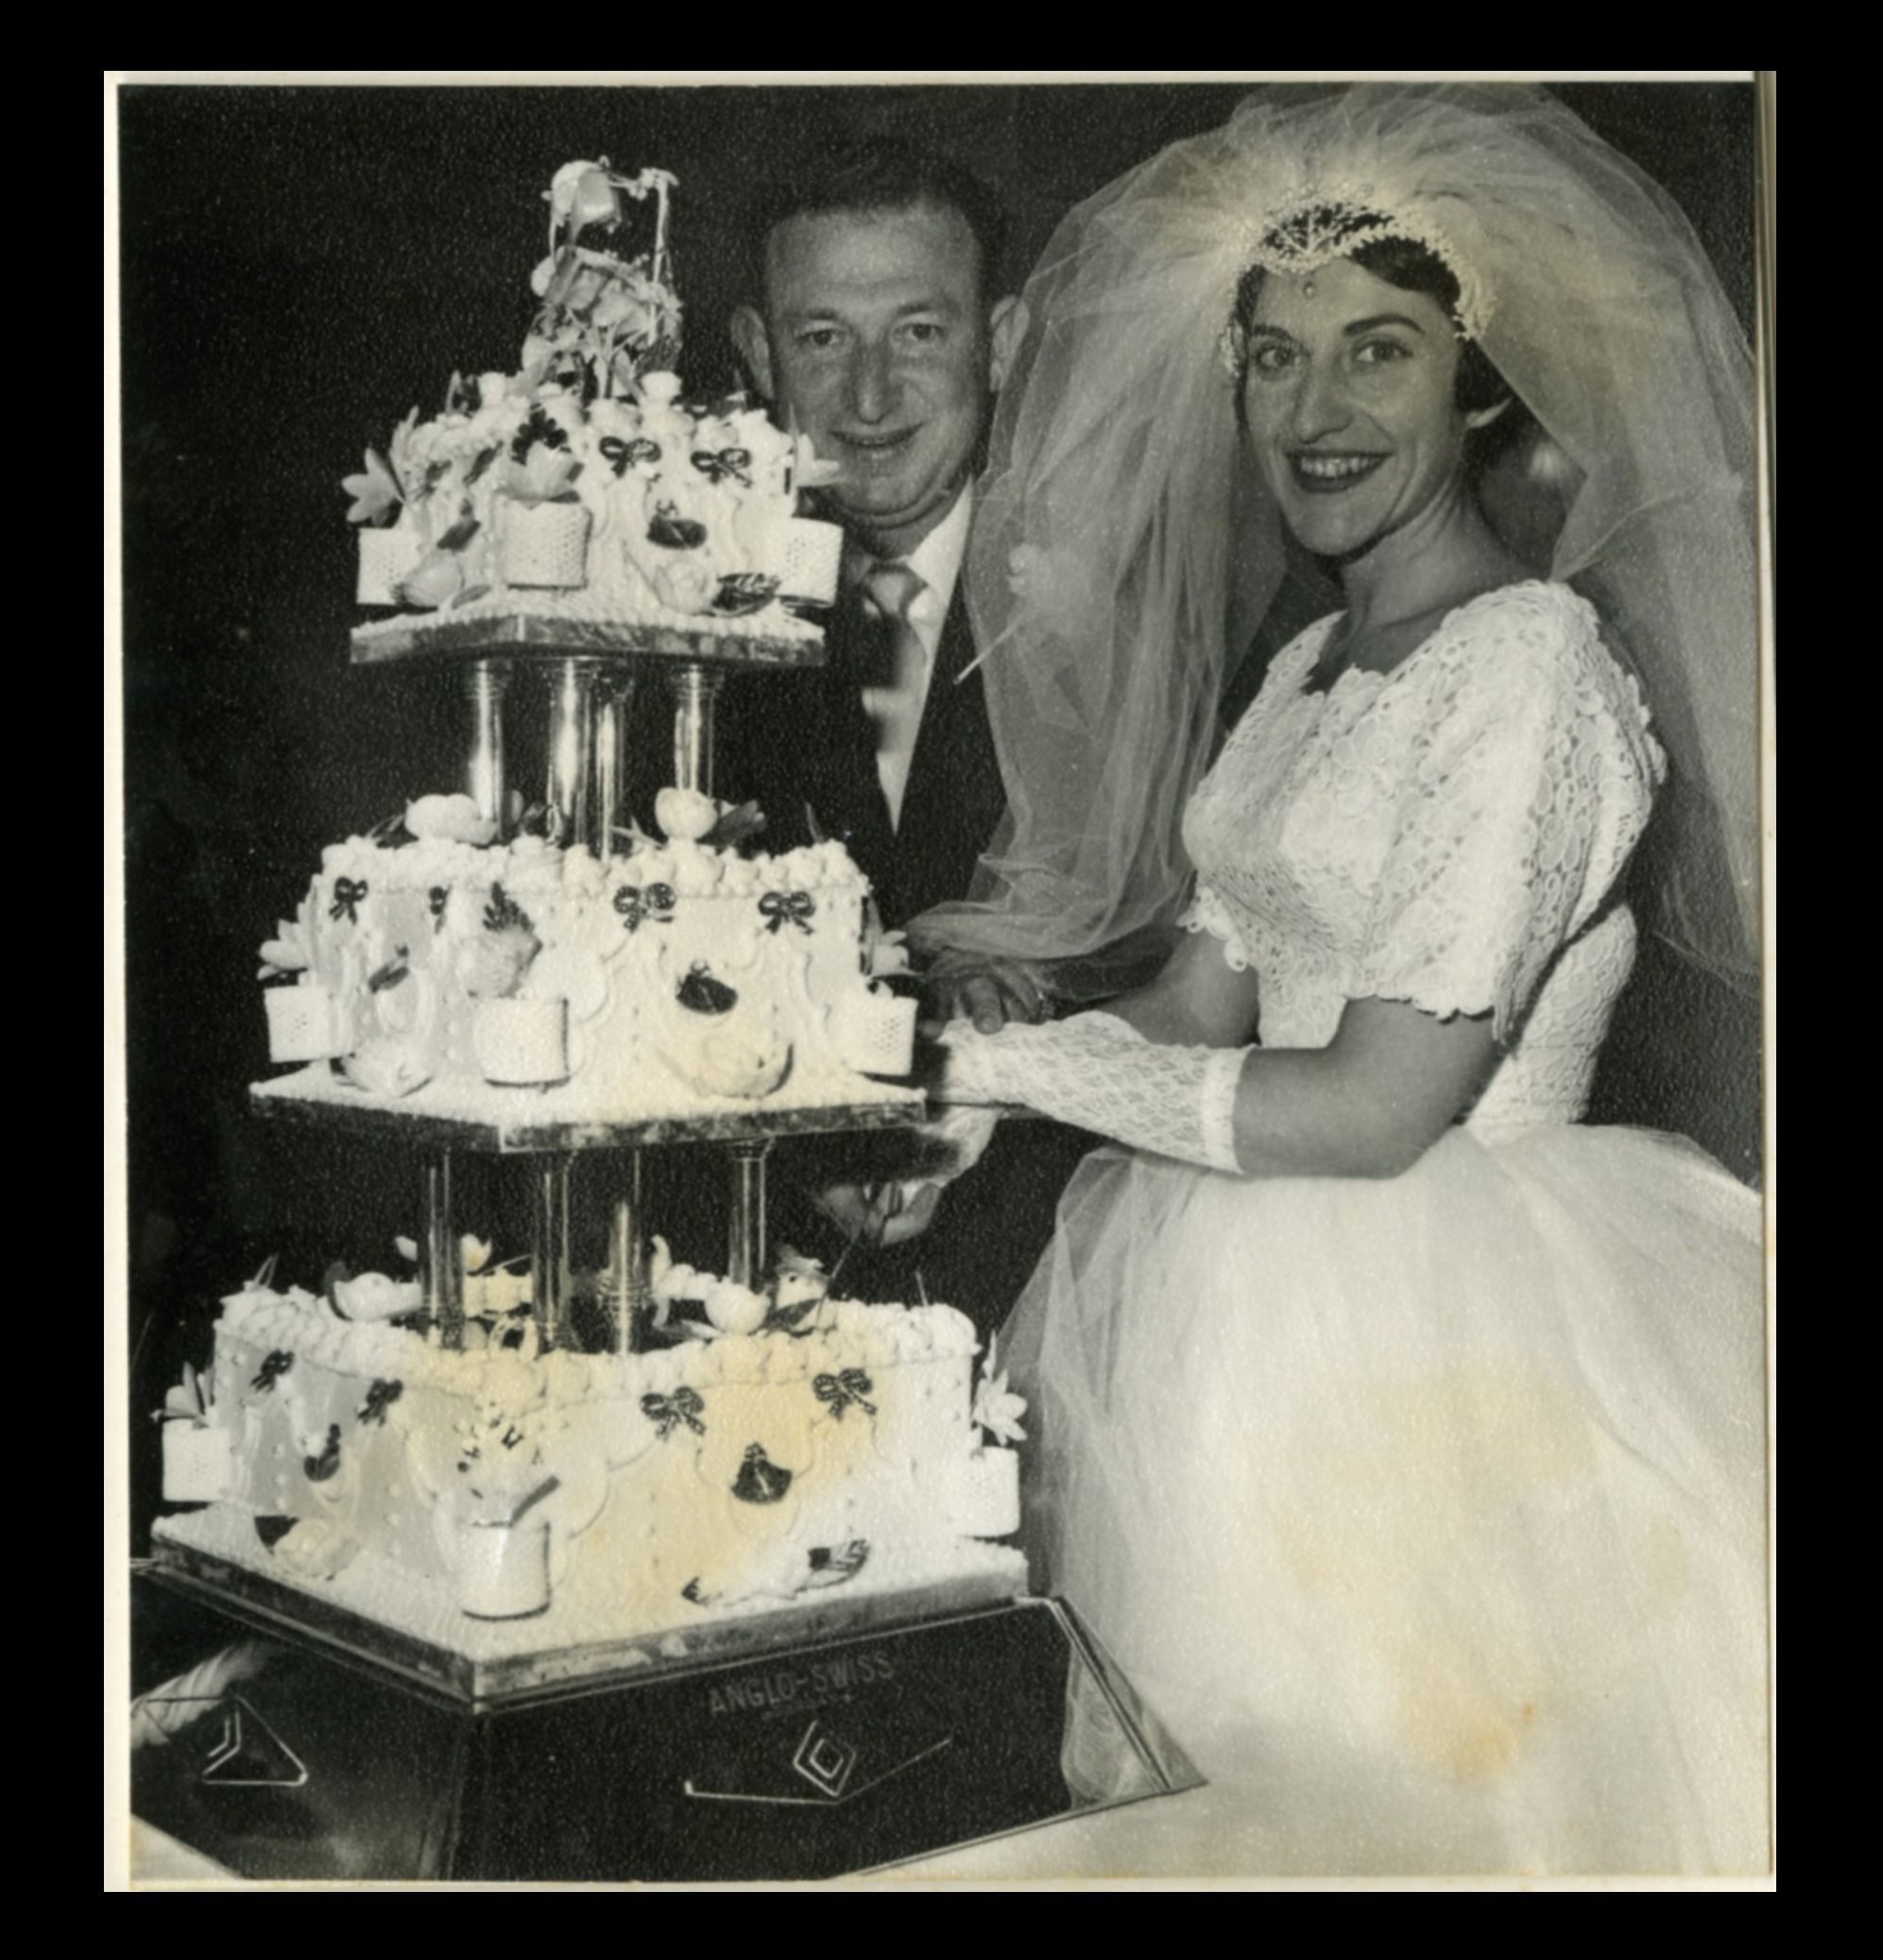 Wedding of Max Skuy and Glenda Silverstone